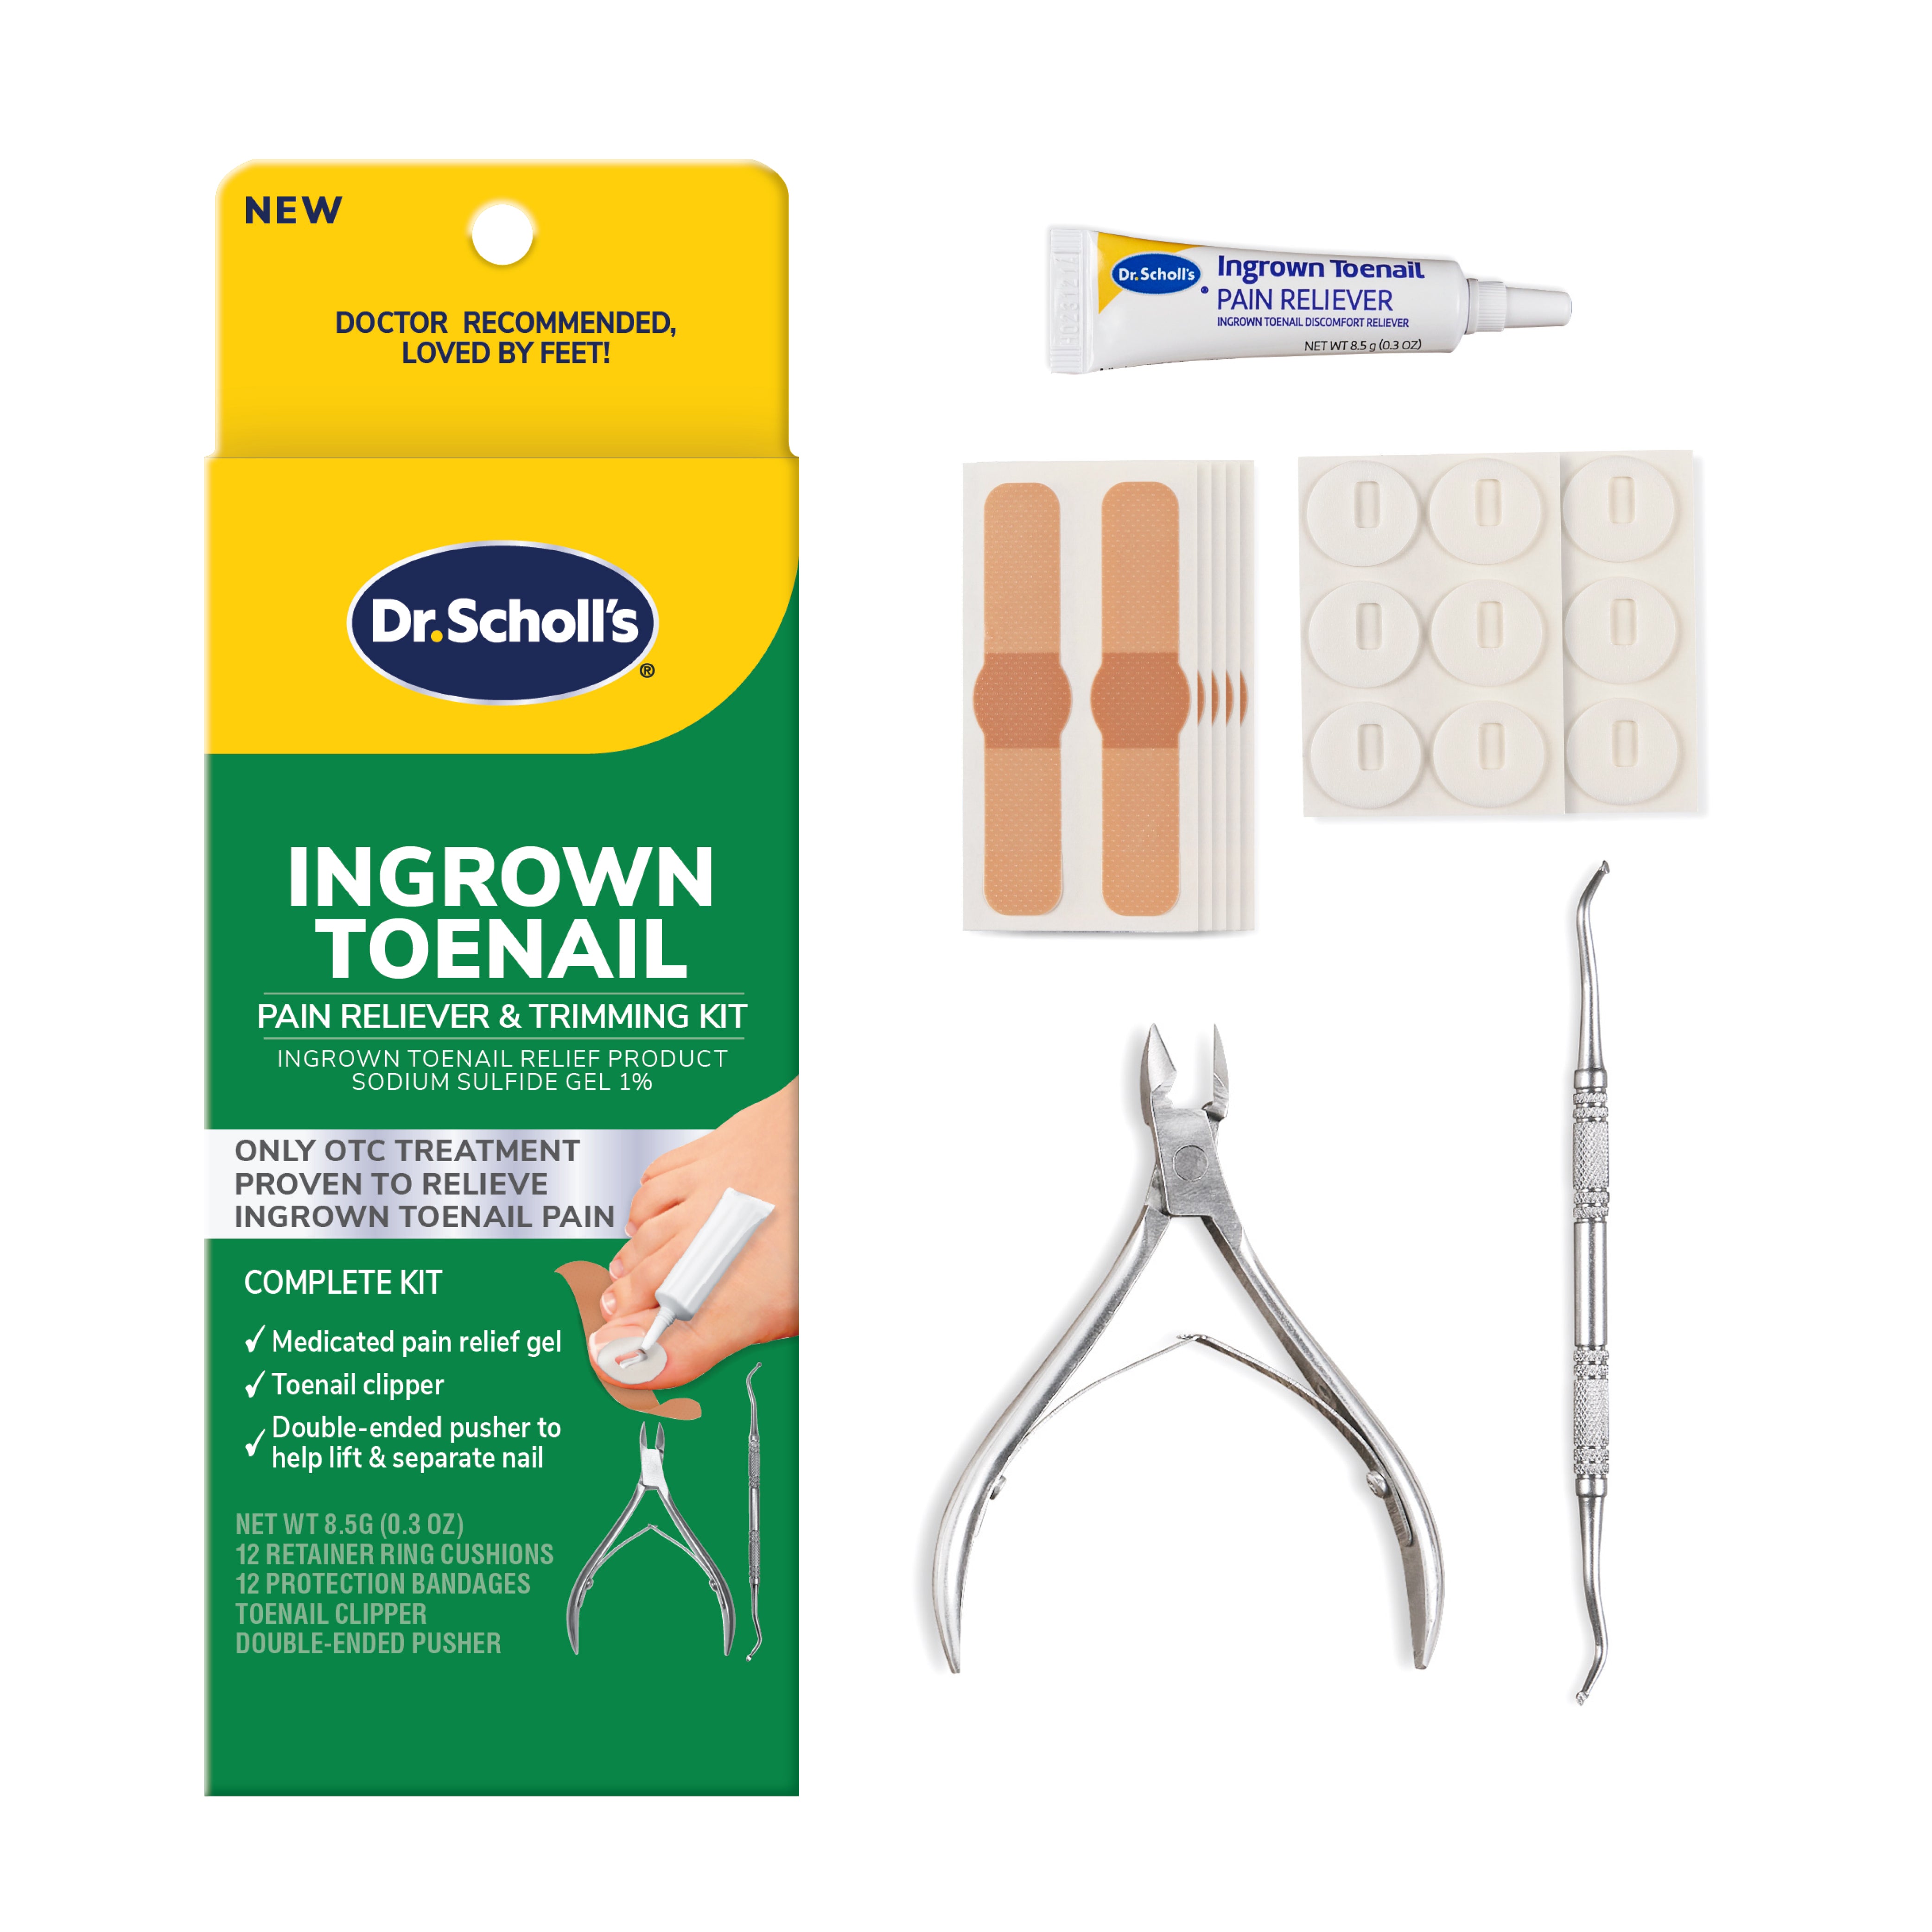 Dr Scholls INGROWN TOENAIL Pain Reliever 8.5g GEL medicated kit Exp 10/23 |  eBay